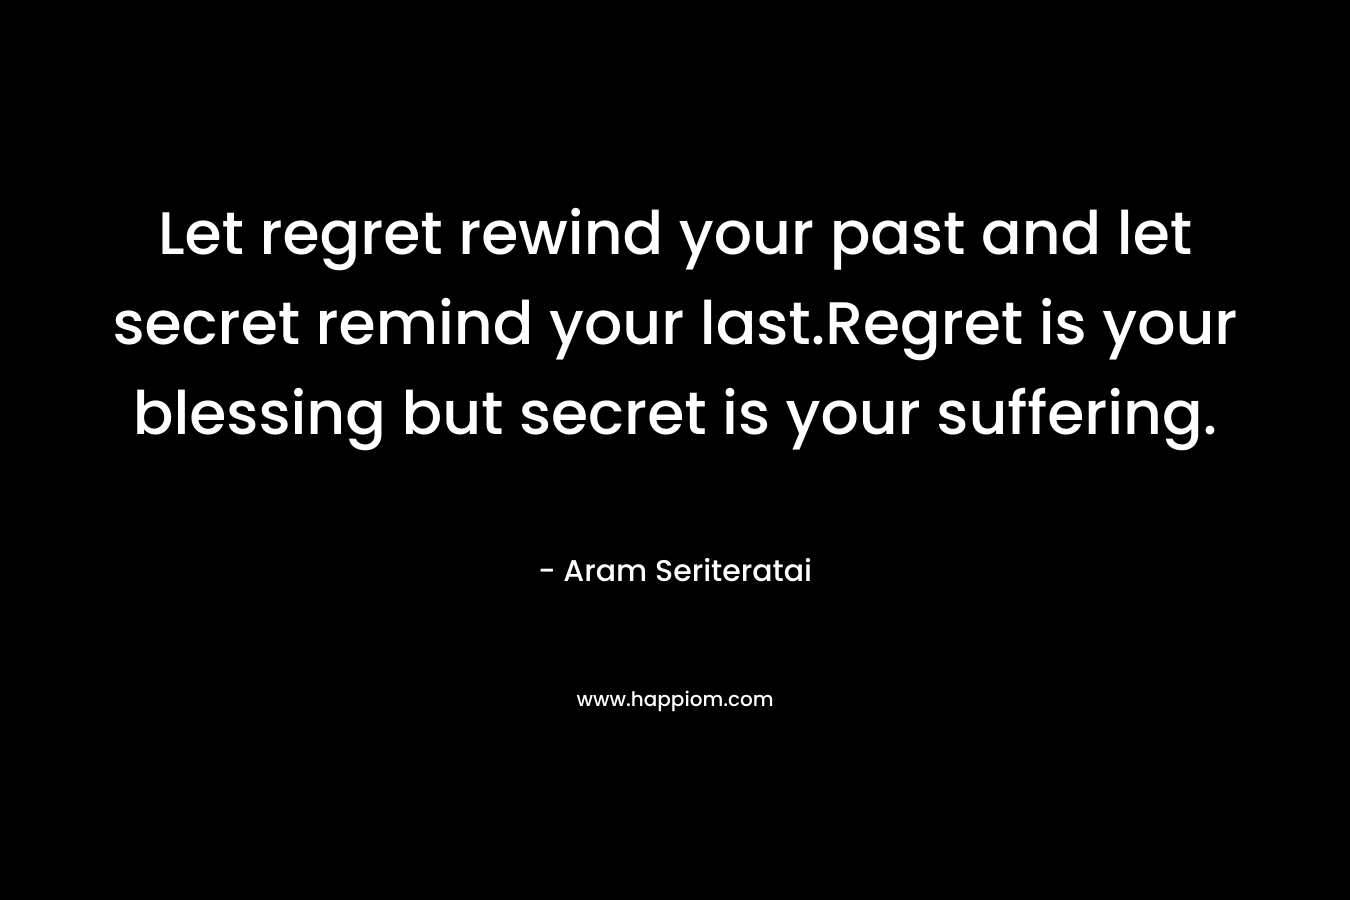 Let regret rewind your past and let secret remind your last.Regret is your blessing but secret is your suffering.